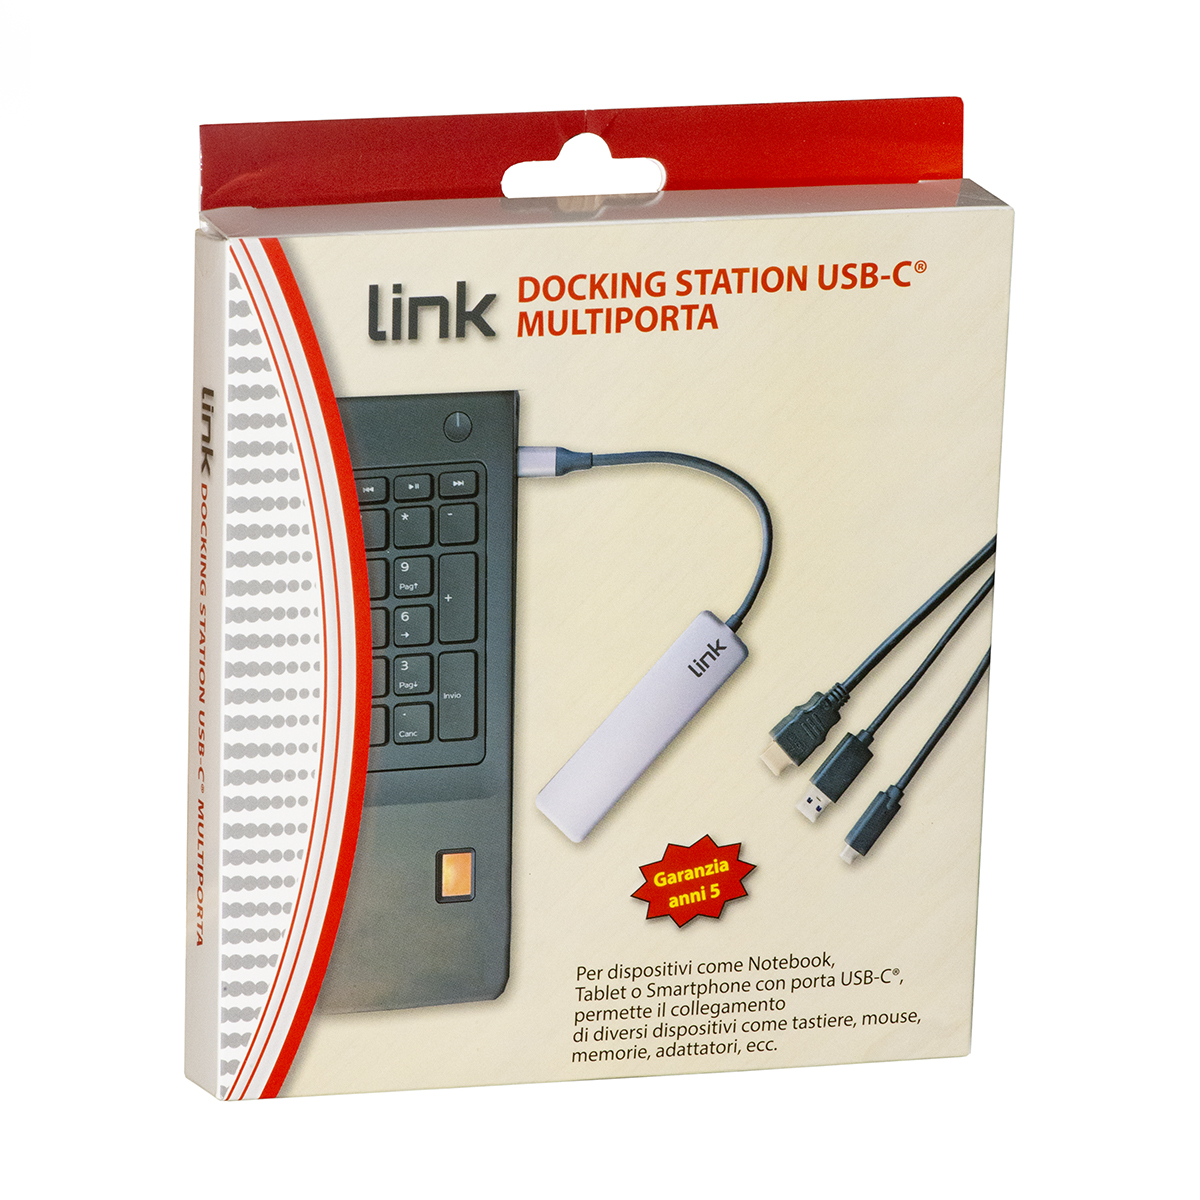 DOCKING STATION USB-C 11 PORTE 3 X VIDEO, USB-C, 3 X USB 3.0, RJ45, 2 X CARD READER, AUDIO